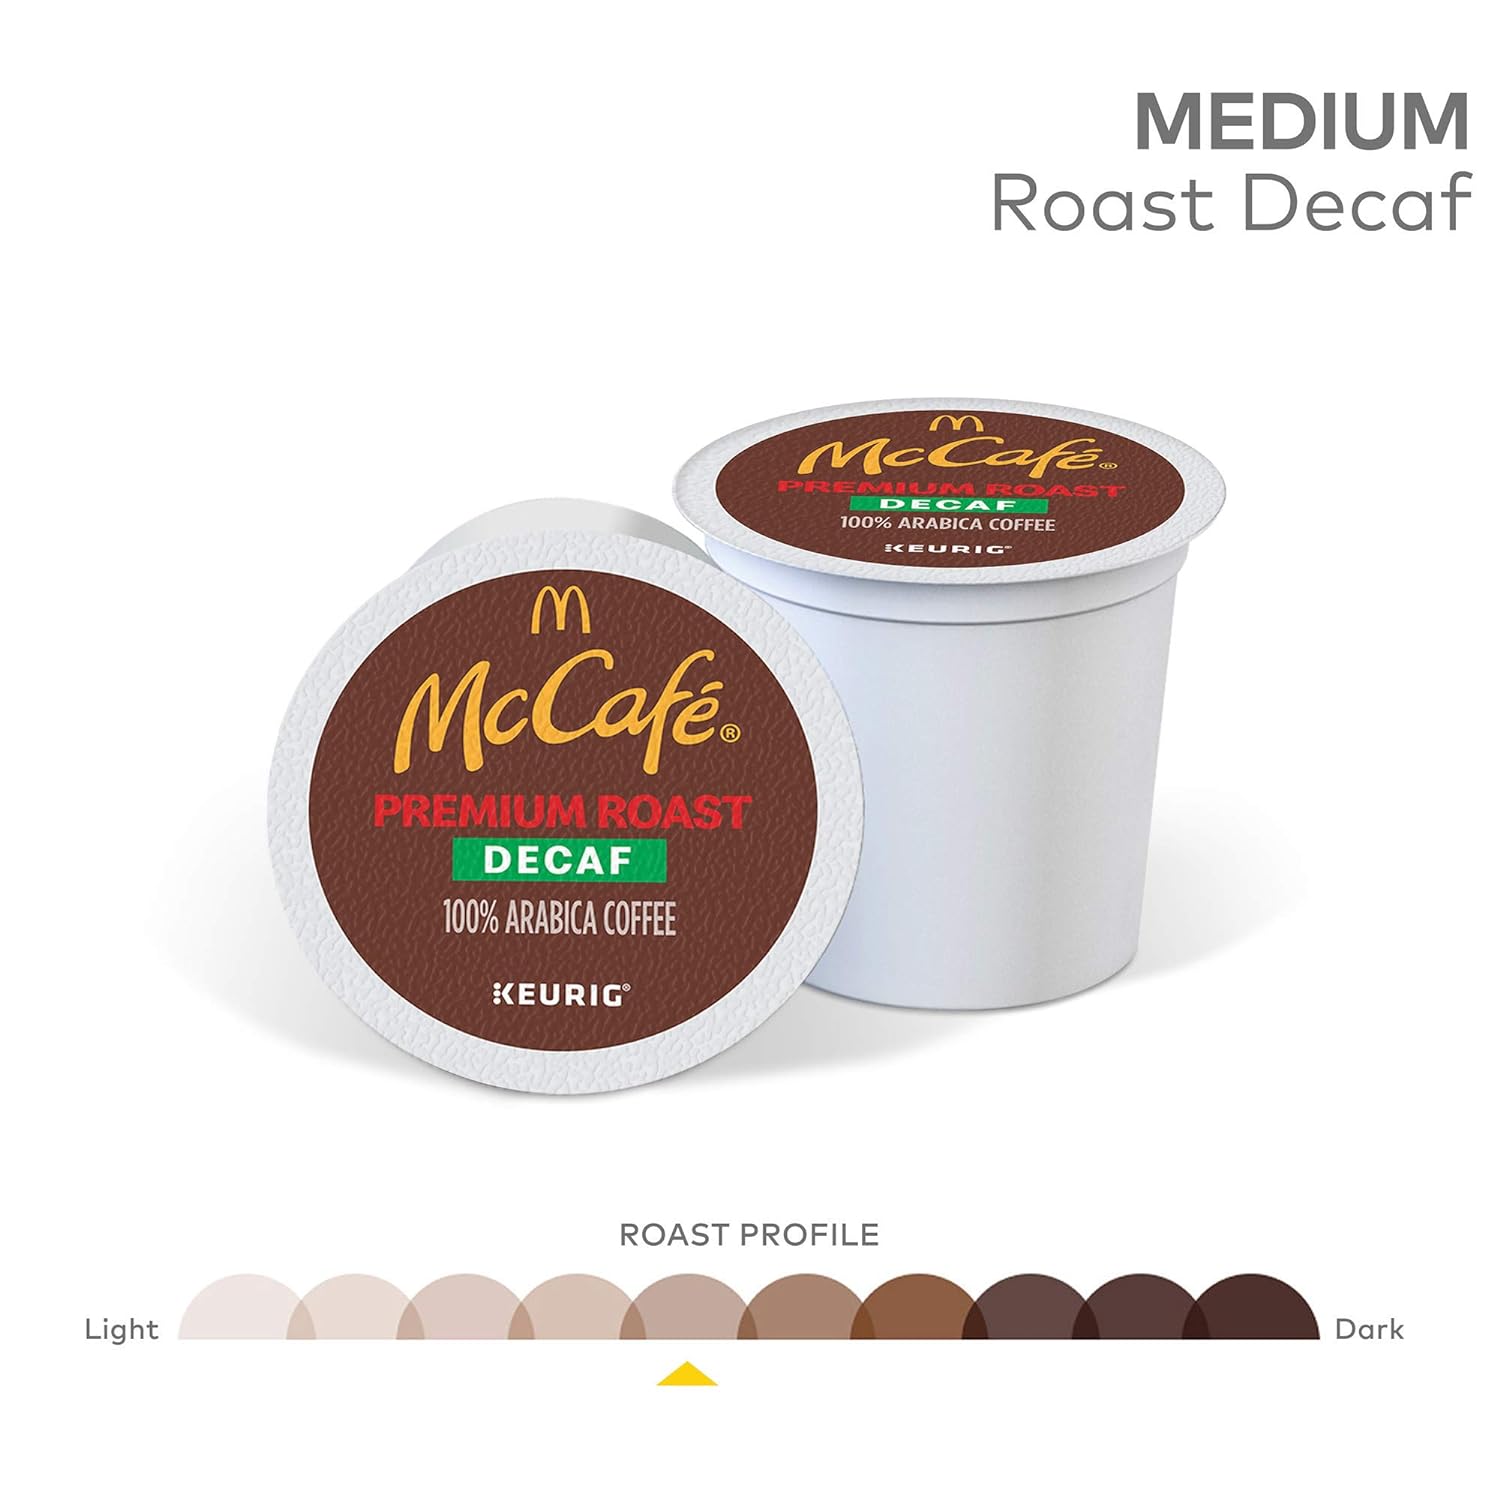 McCafe Premium Roast Decaf, Keurig Single Serve K-Cup Pods, Medium Roast Coffee Pods, 48 Count : Everything Else